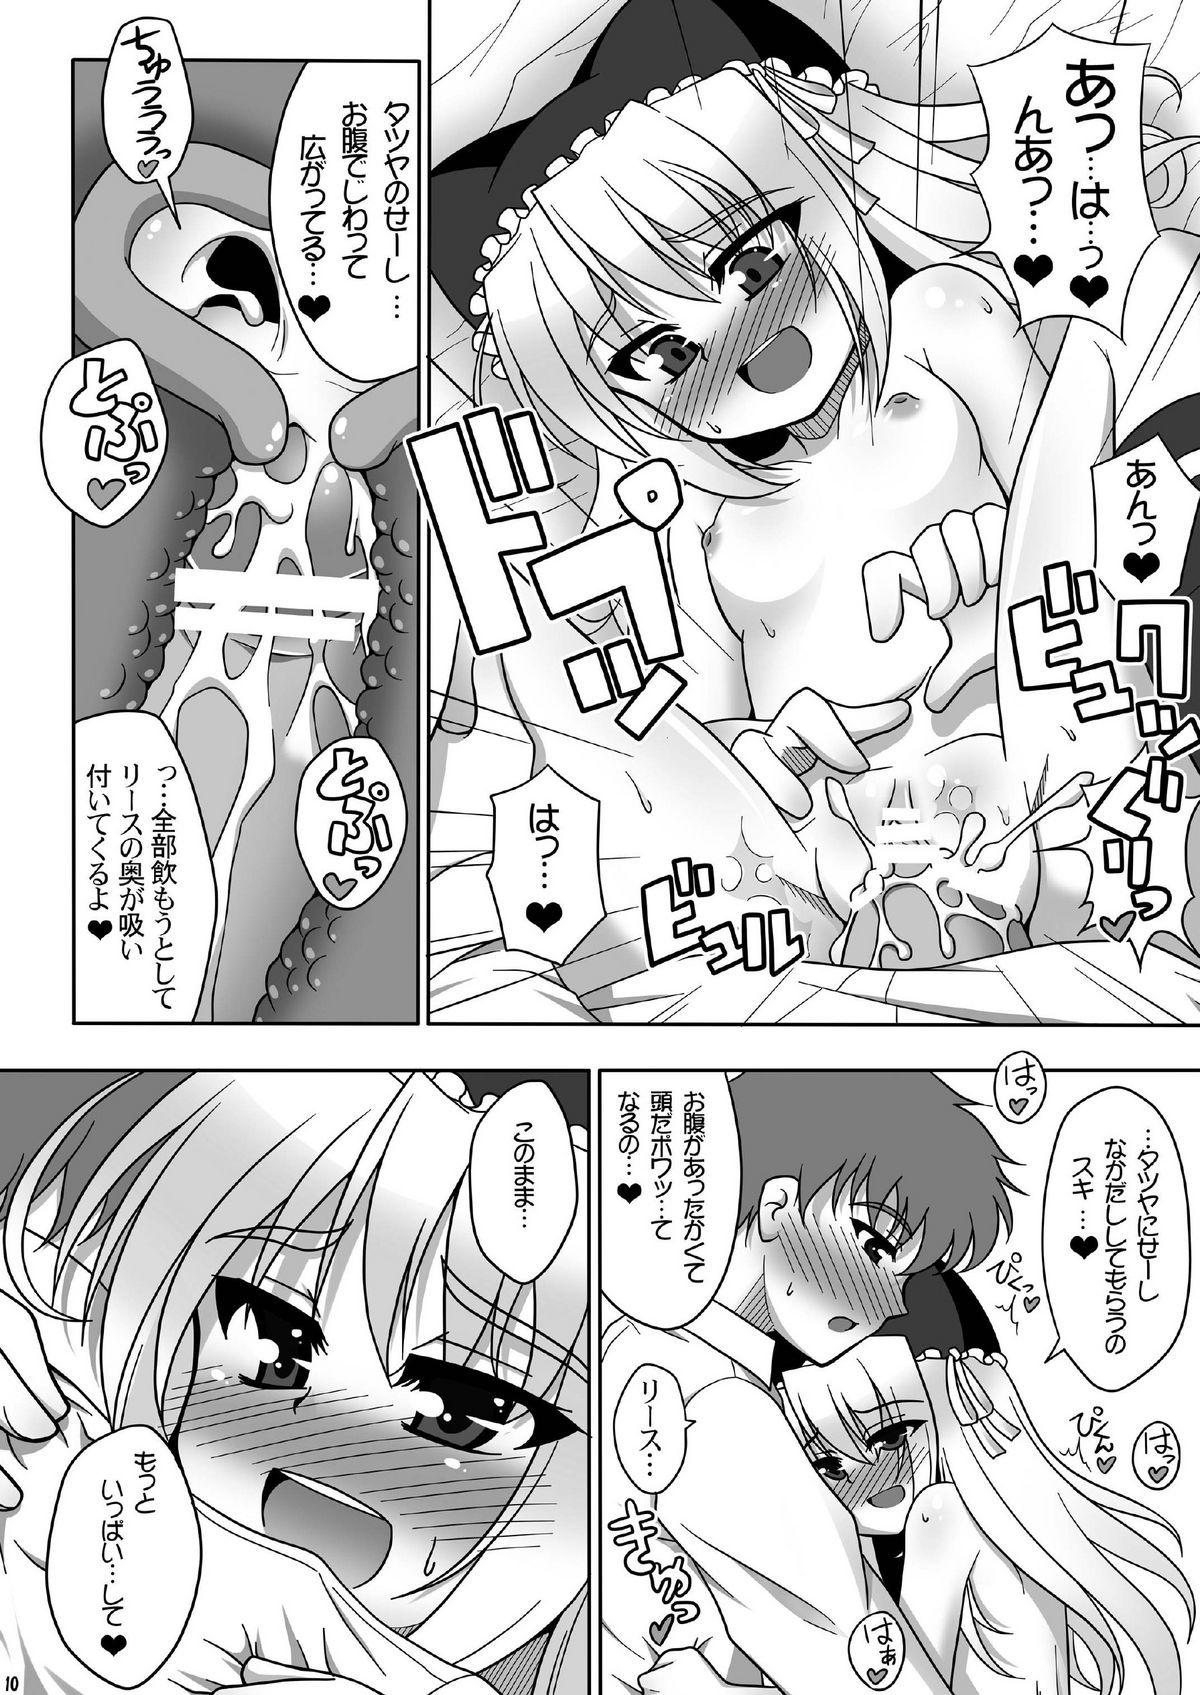 Glory Hole Risu LOVERS - Yoake mae yori ruriiro na Cheating - Page 10